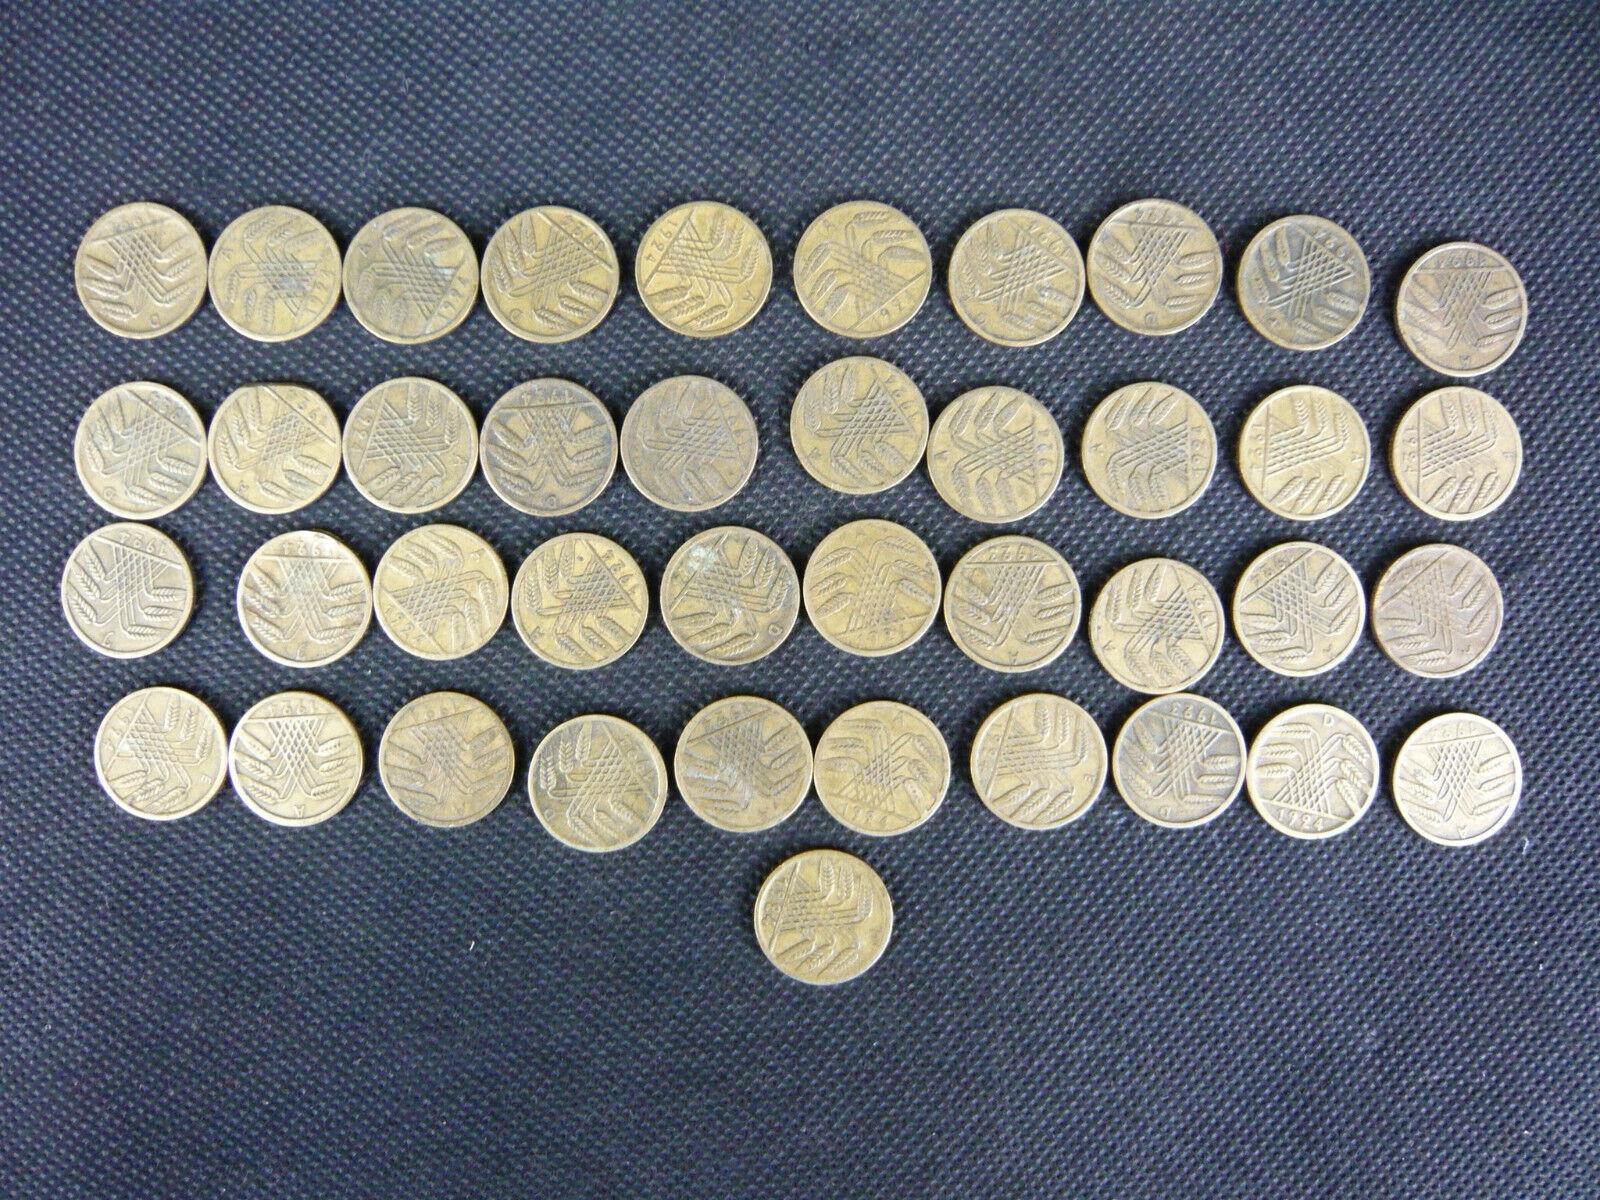 Chinese Set of 41 Course Coins - 5 Rentenpfennig 1923/1924 - Weimar Republic - 1H28 For Sale